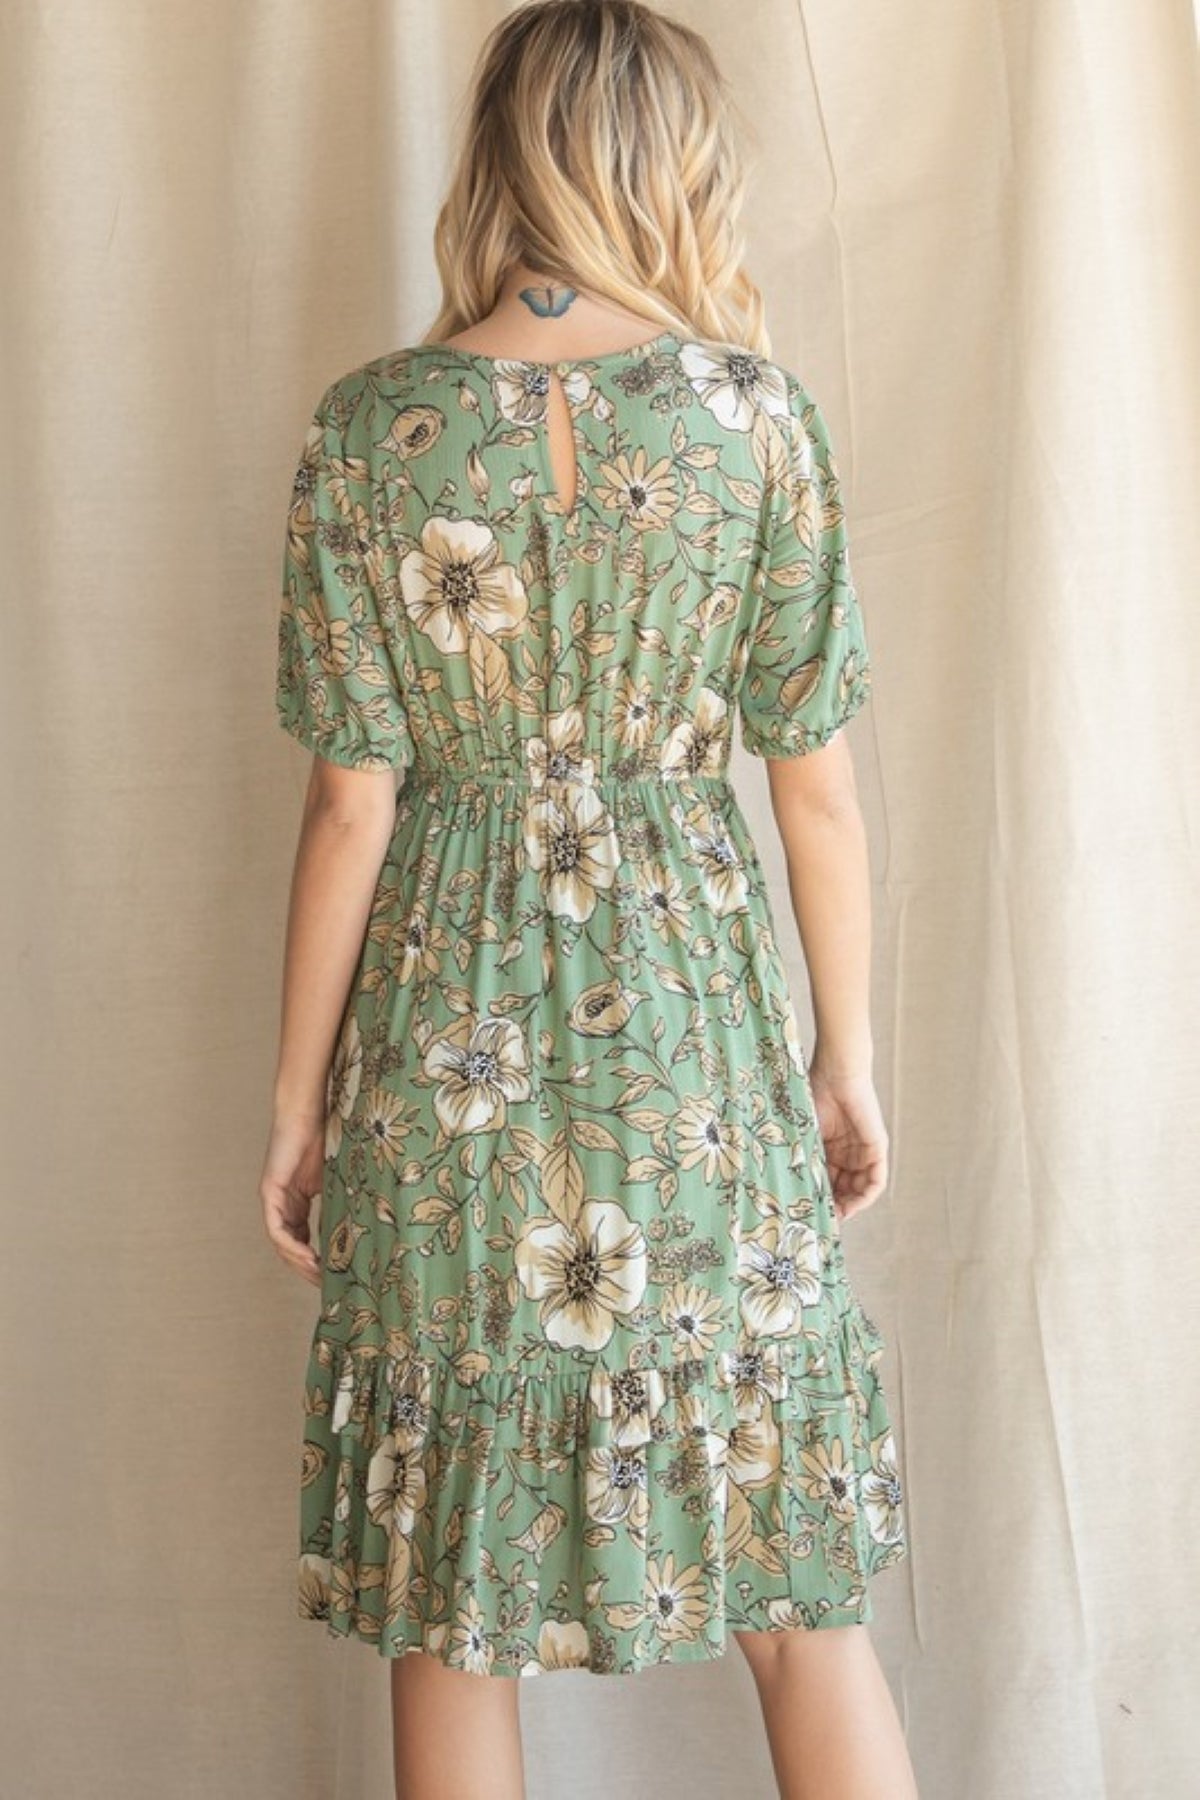 Jayla Floral Ruffle Dress in Sage